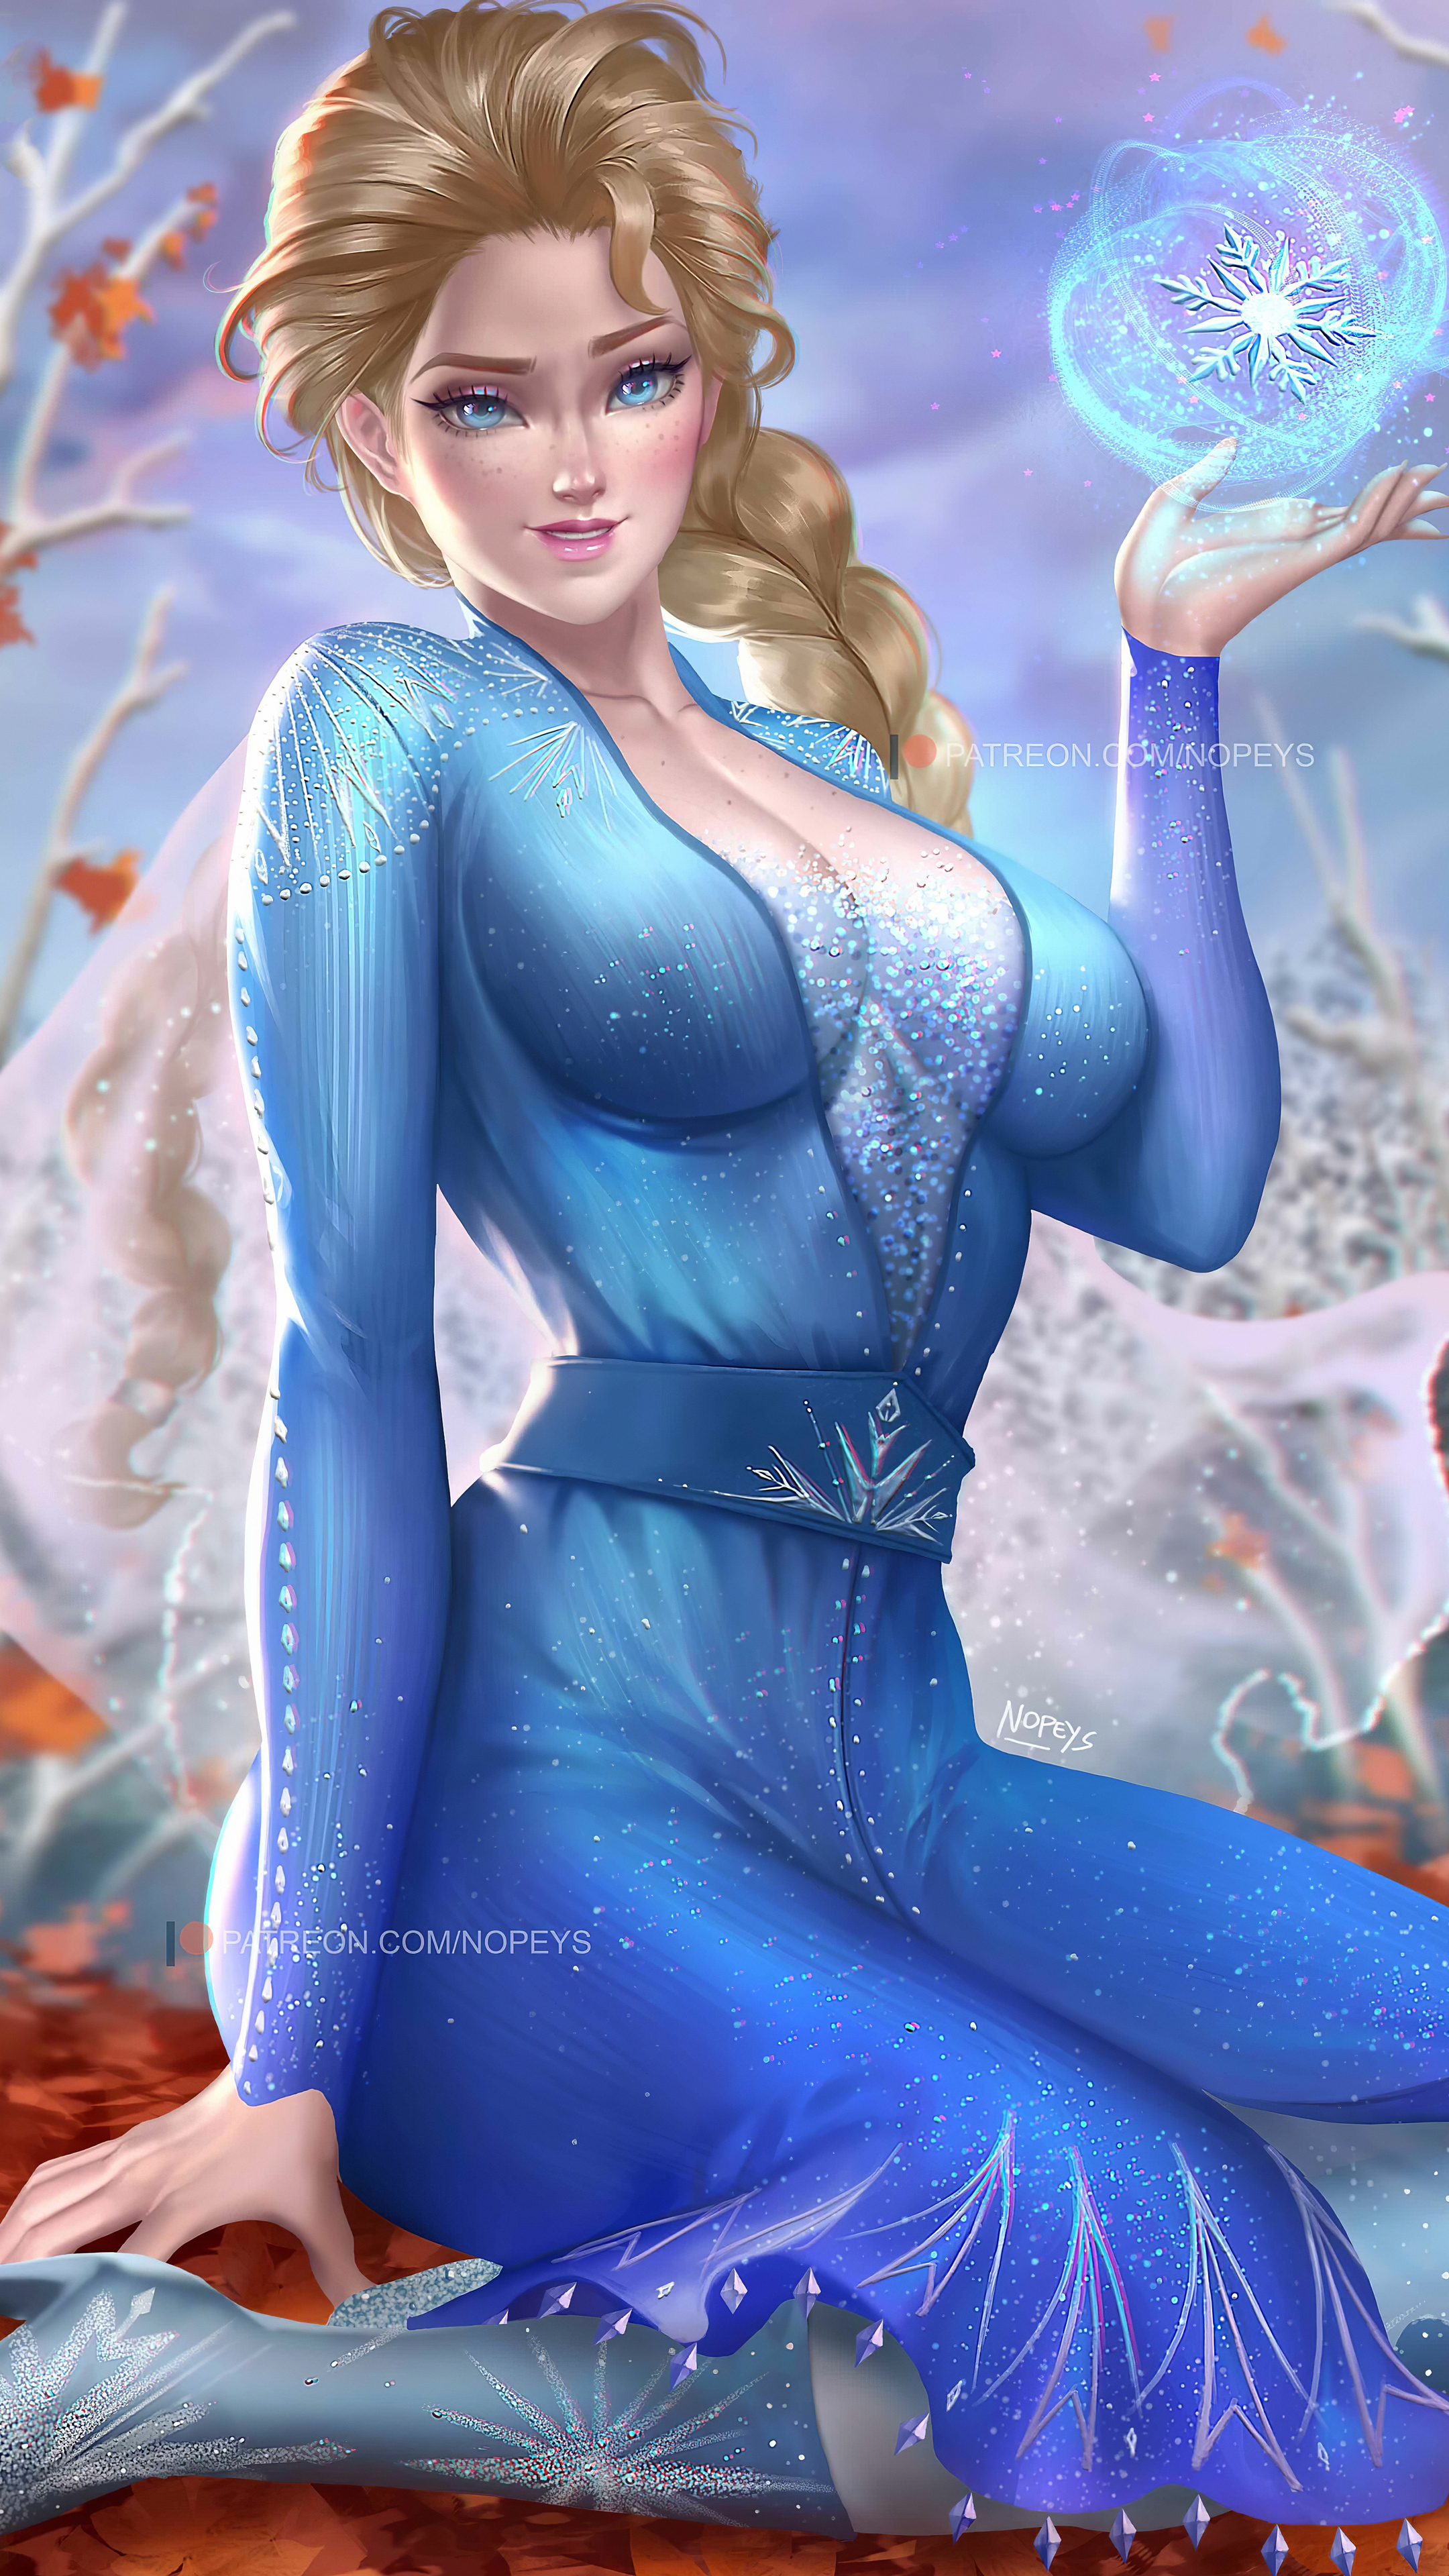 Snow Queen Elsa In Frozen 4k Sony Xperia X, XZ, Z5 Premium HD 4k Wallpaper, Image, Background, Photo and Picture